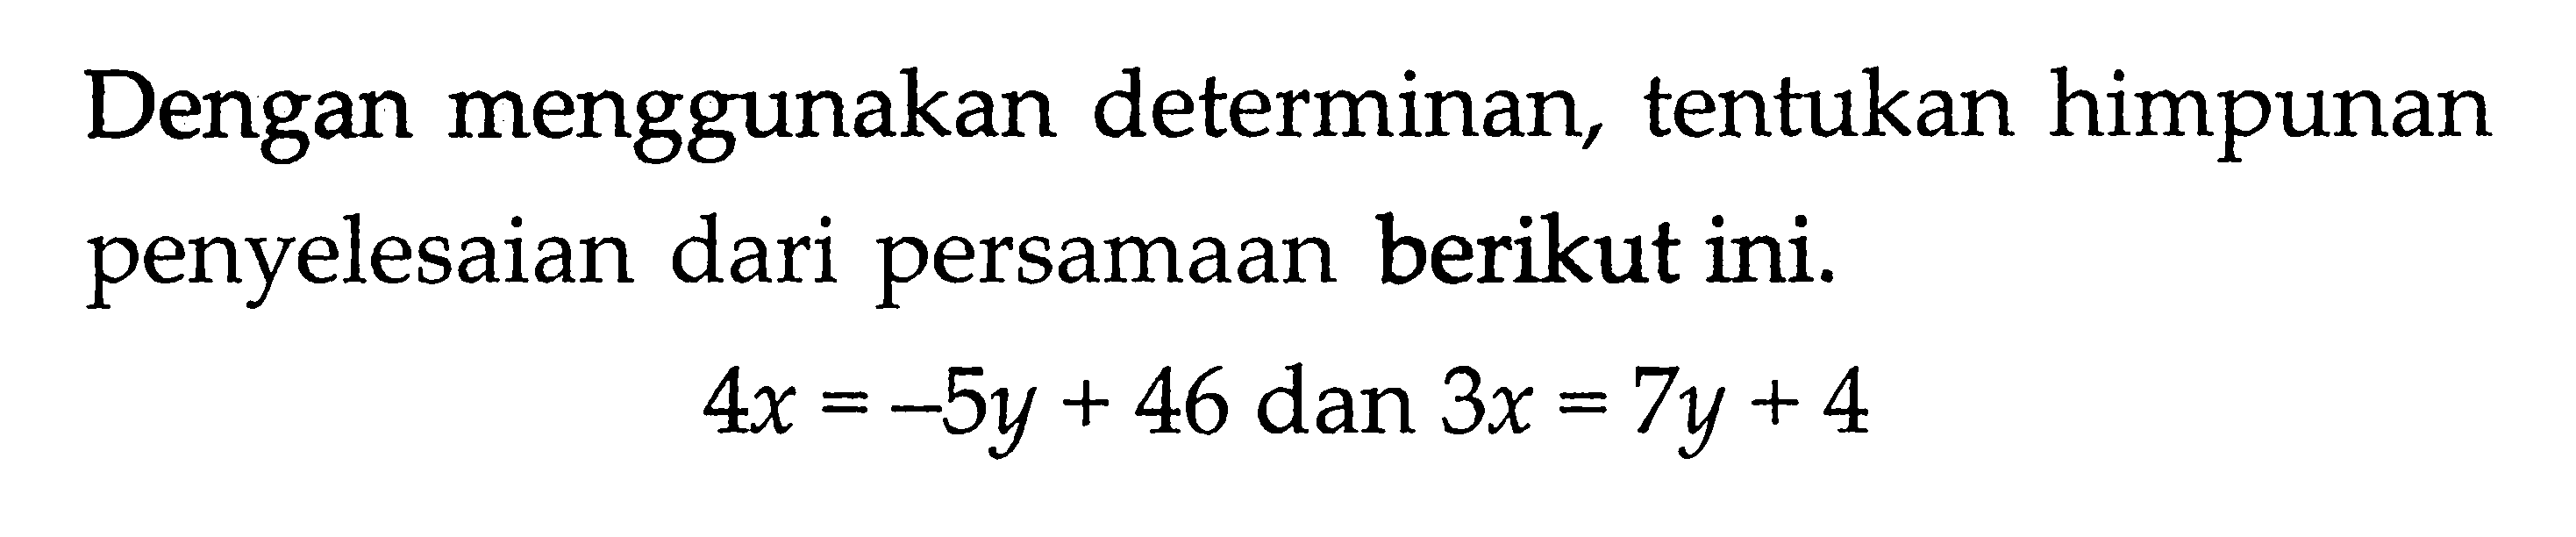 Dengan menggunakan determinan, tentukan himpunan penyelesaian dari persamaan berikut ini. 4x = -5y + 46 dan 3x = 7y + 4